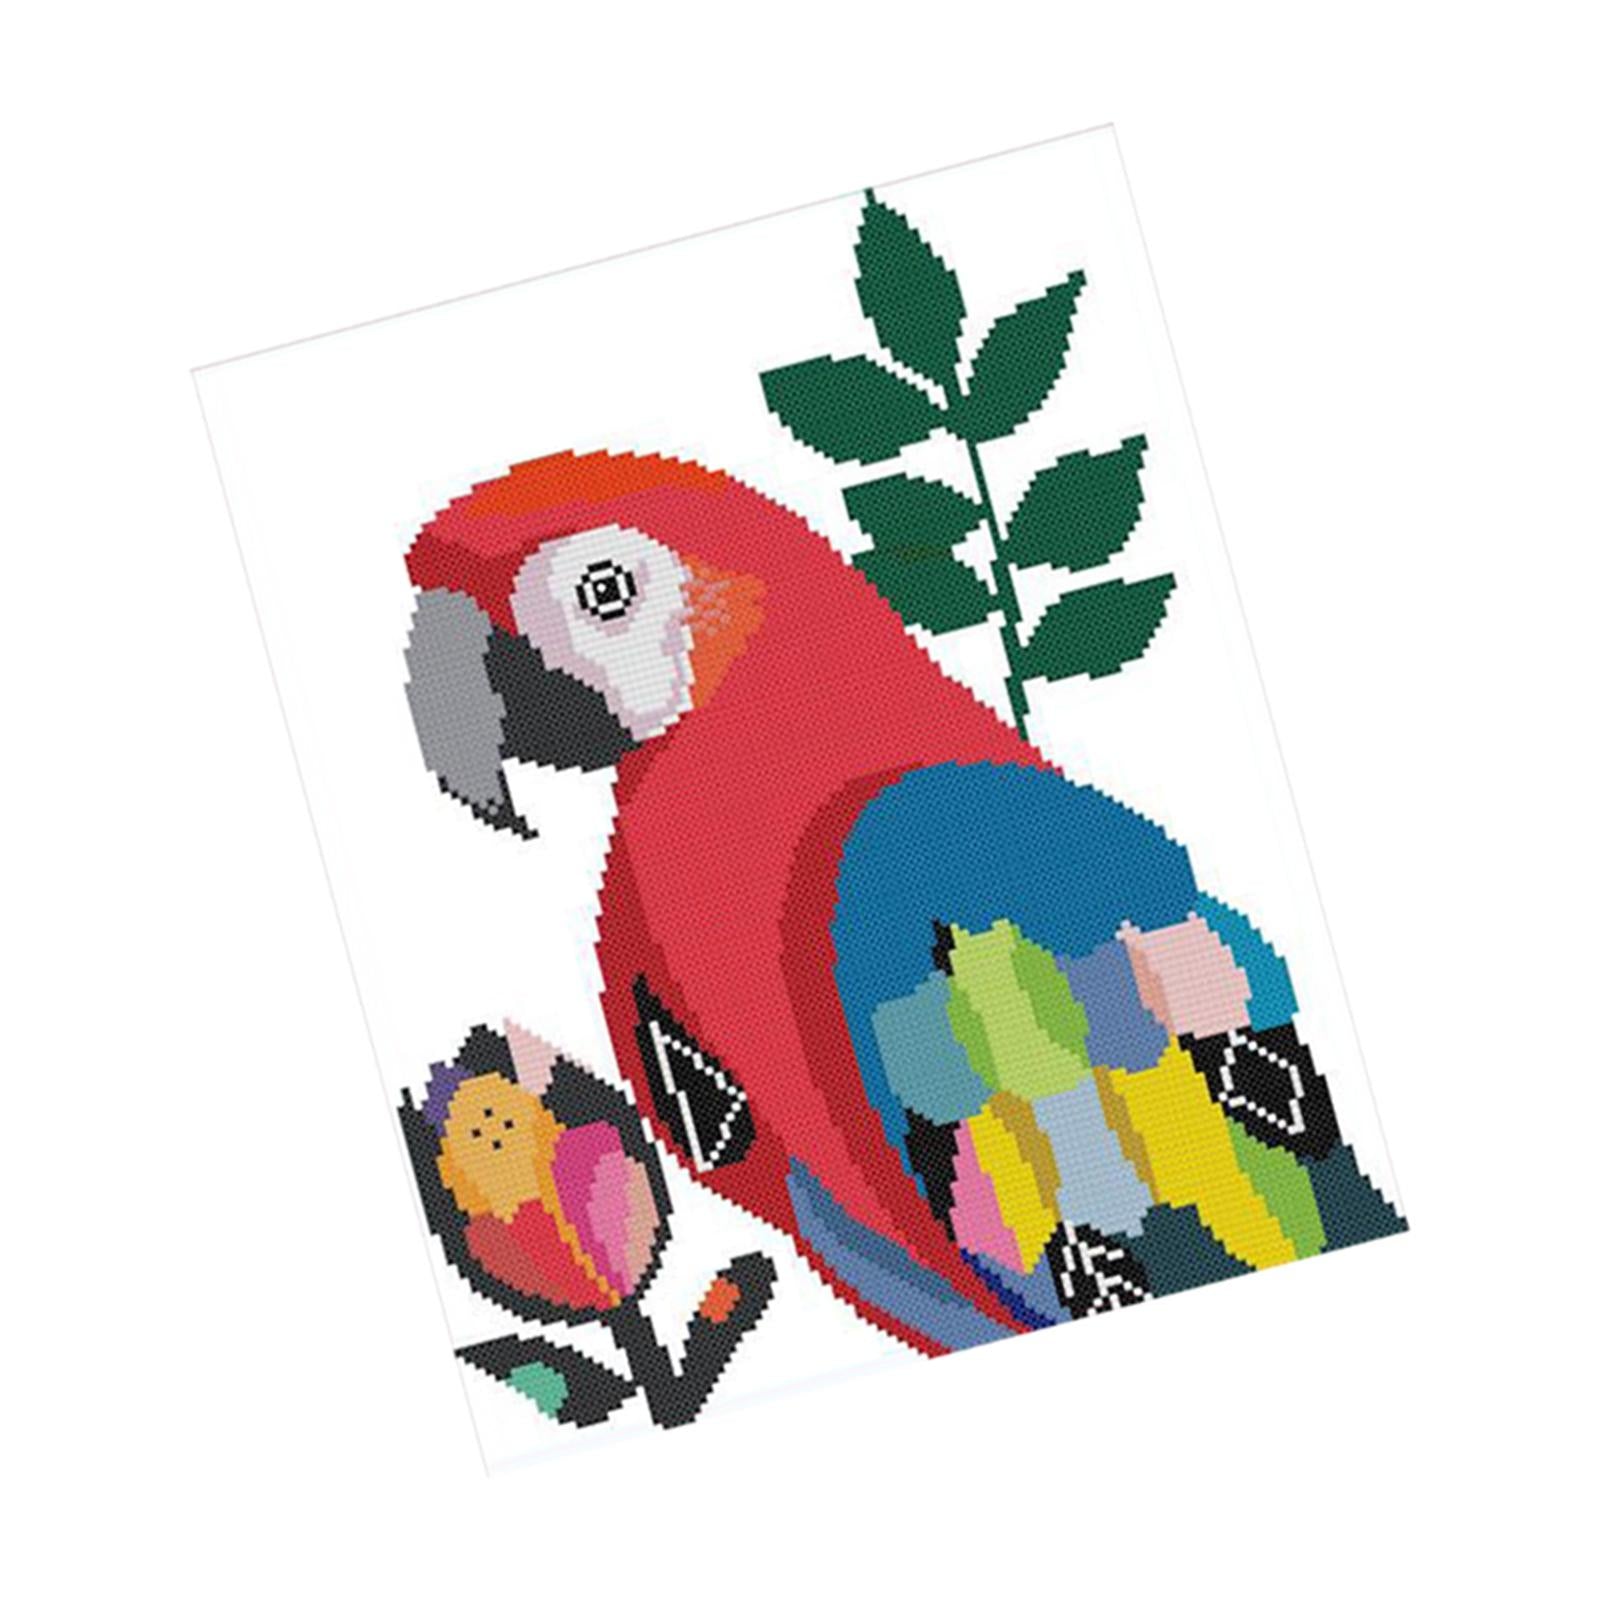 Parrot Cross Stitch Kit Bird Pattern Needlework Full Embroidery Starter Kits